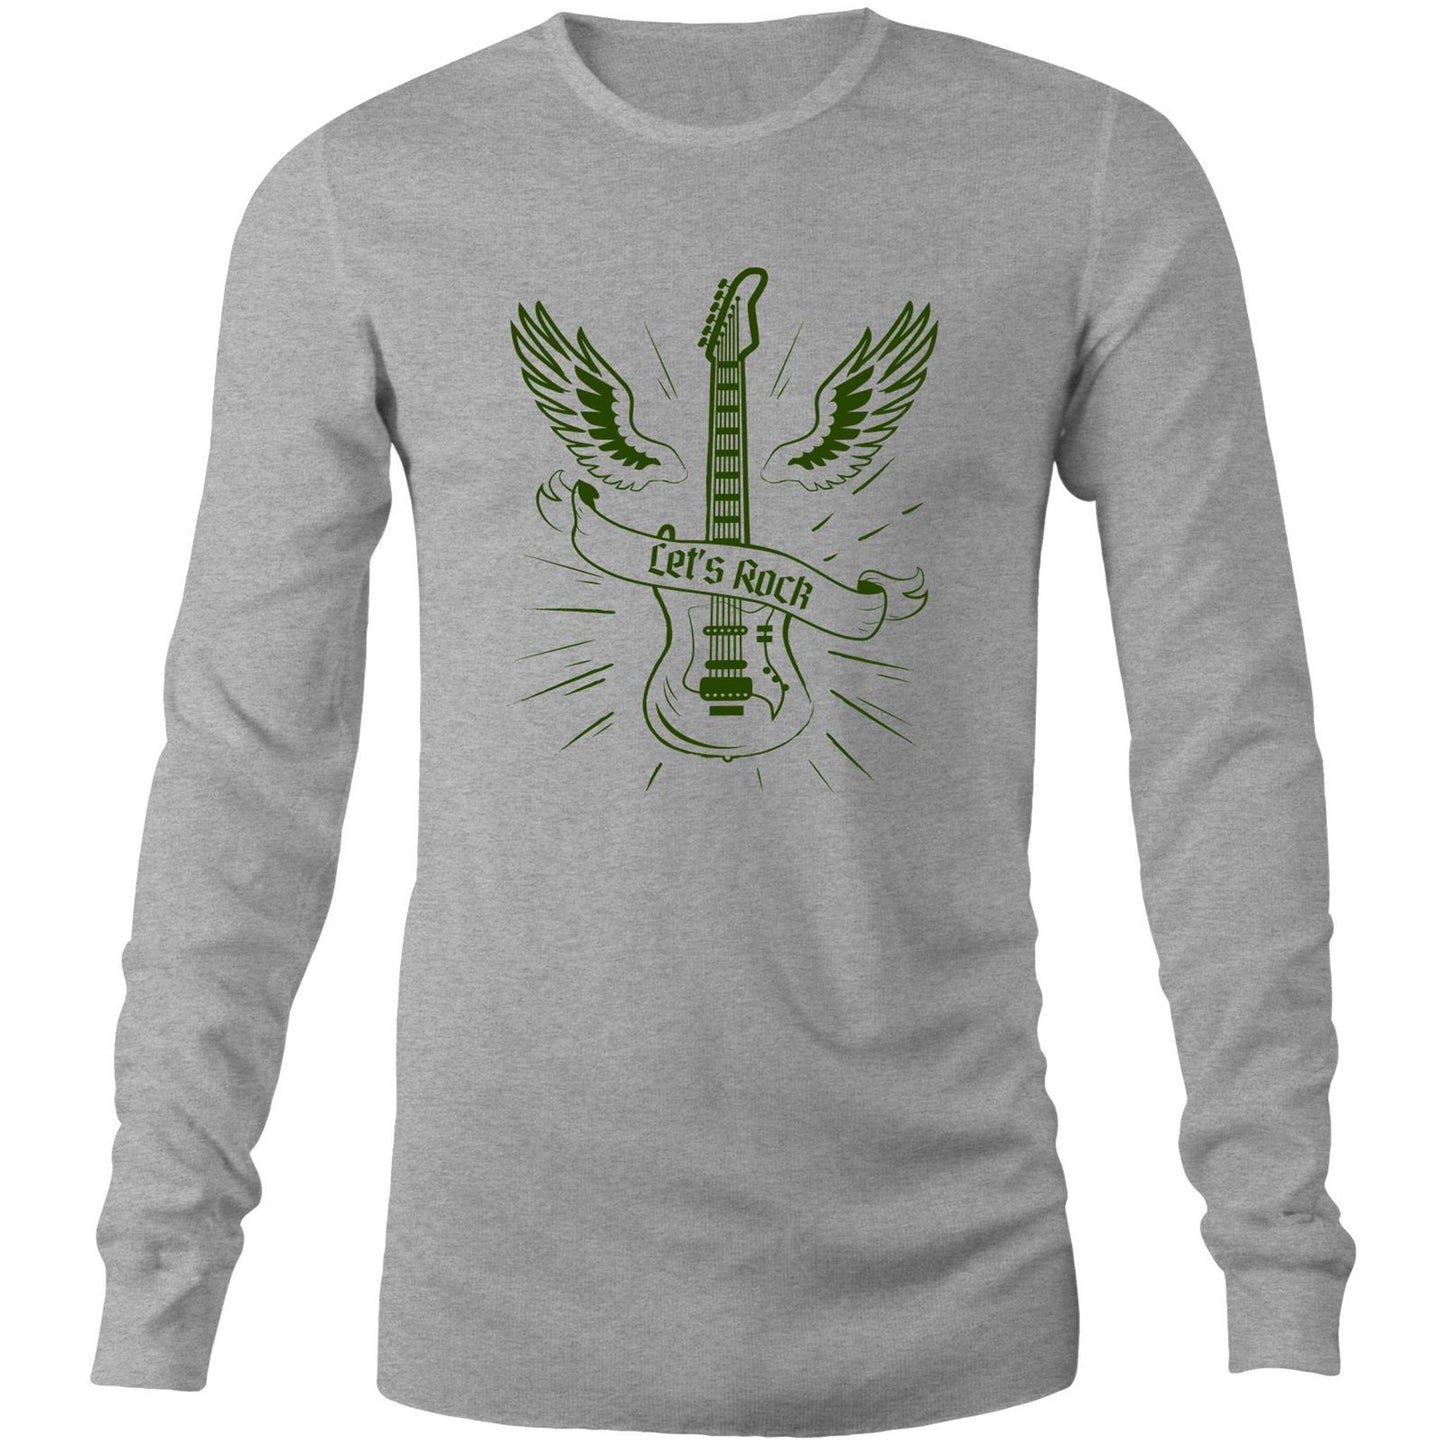 Let's Rock - Long Sleeve T-Shirt Grey Marle Unisex Long Sleeve T-shirt Music